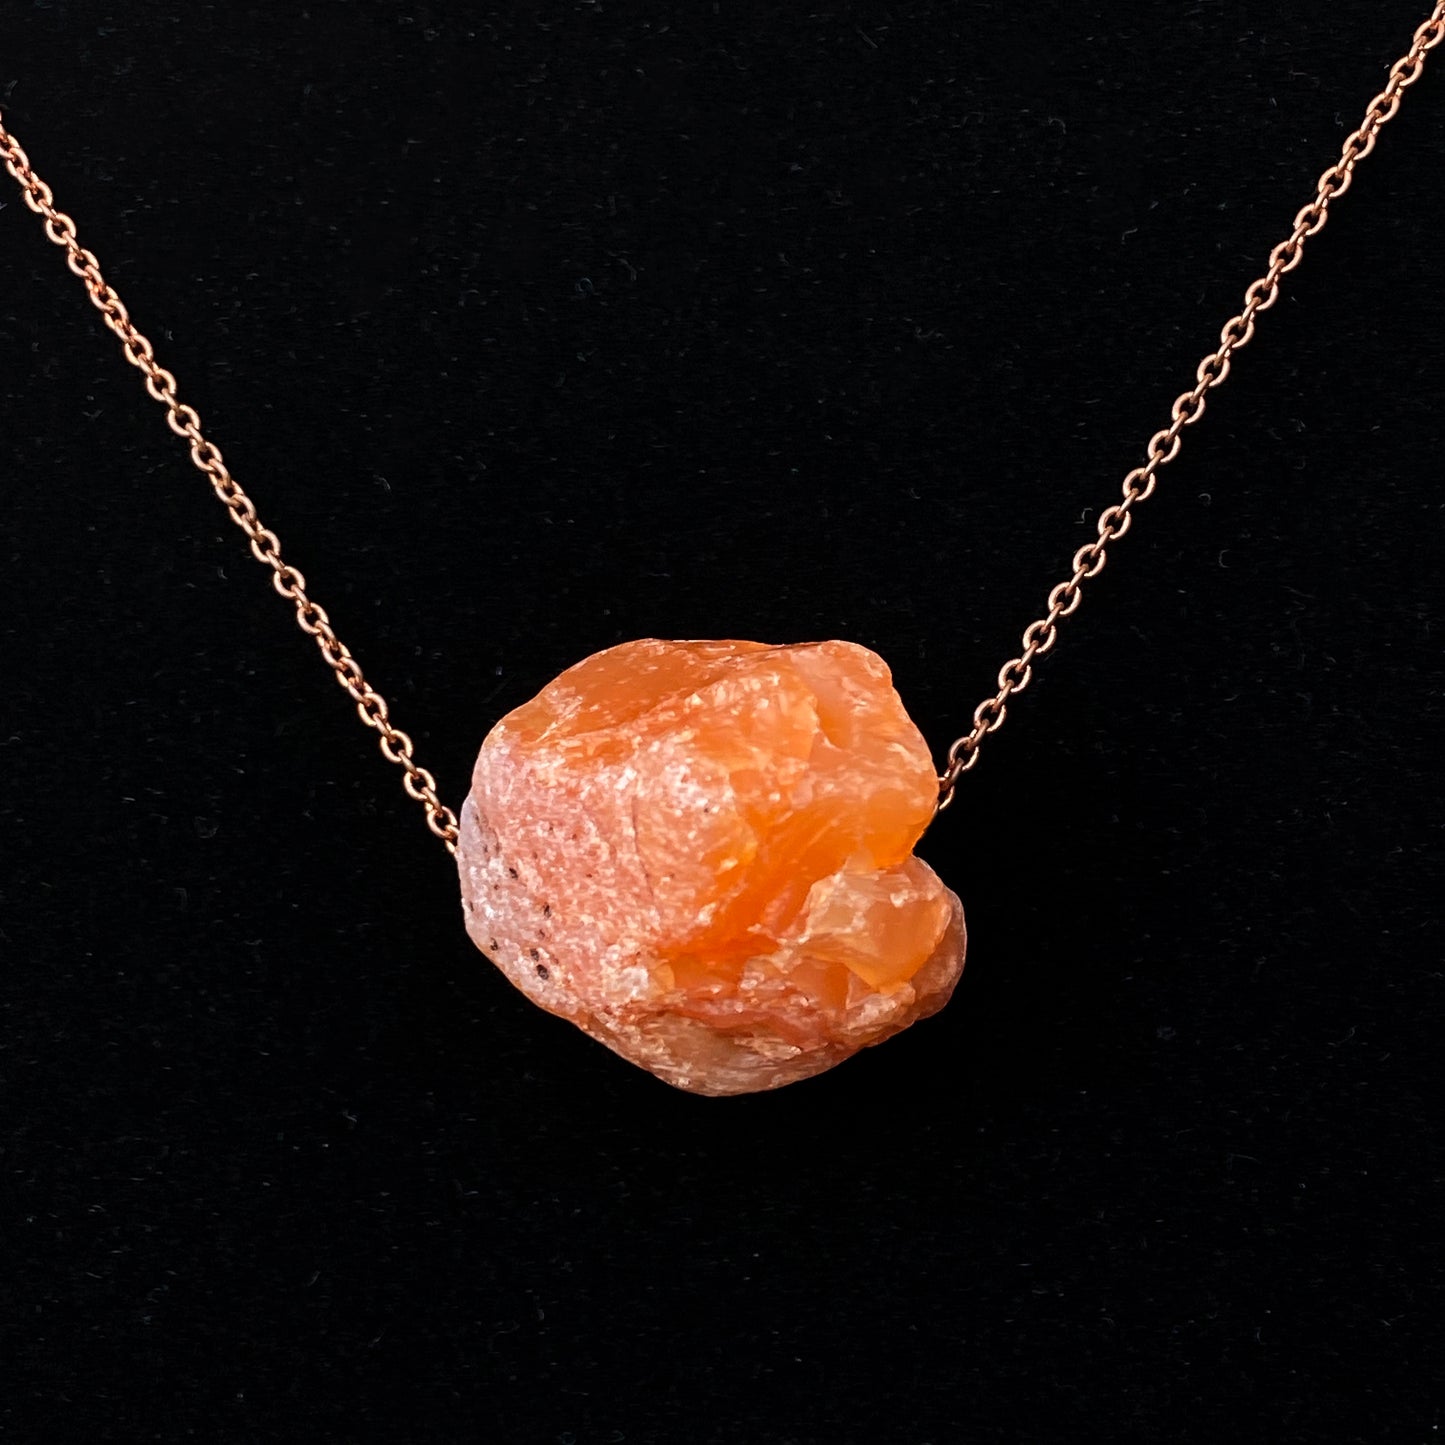 Carnelian gemstone with Copper Chain Choker